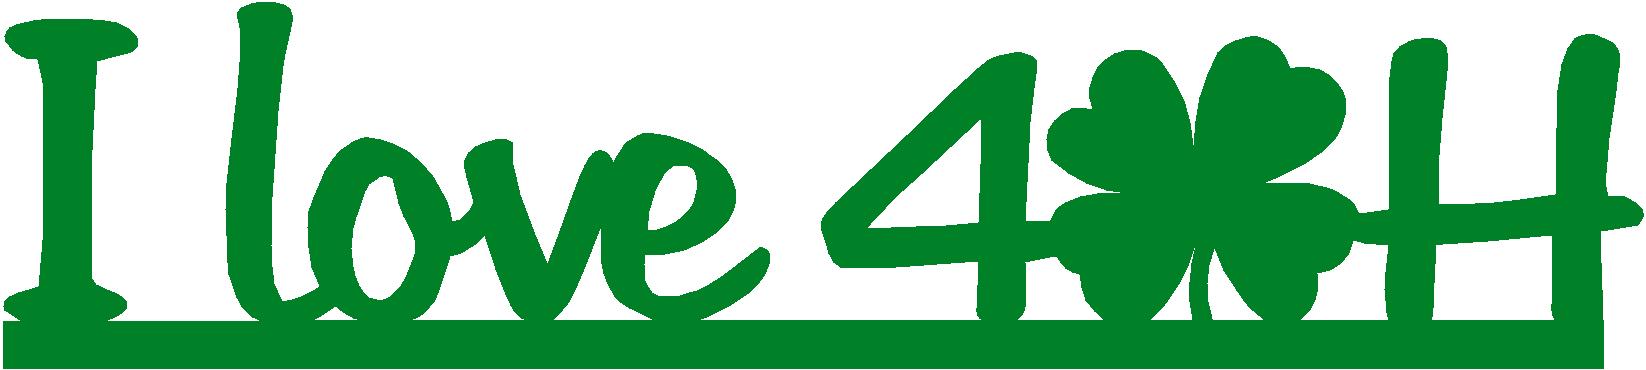 4-h Logo Clip Art - Free Clip Art, Christmas Clip Art